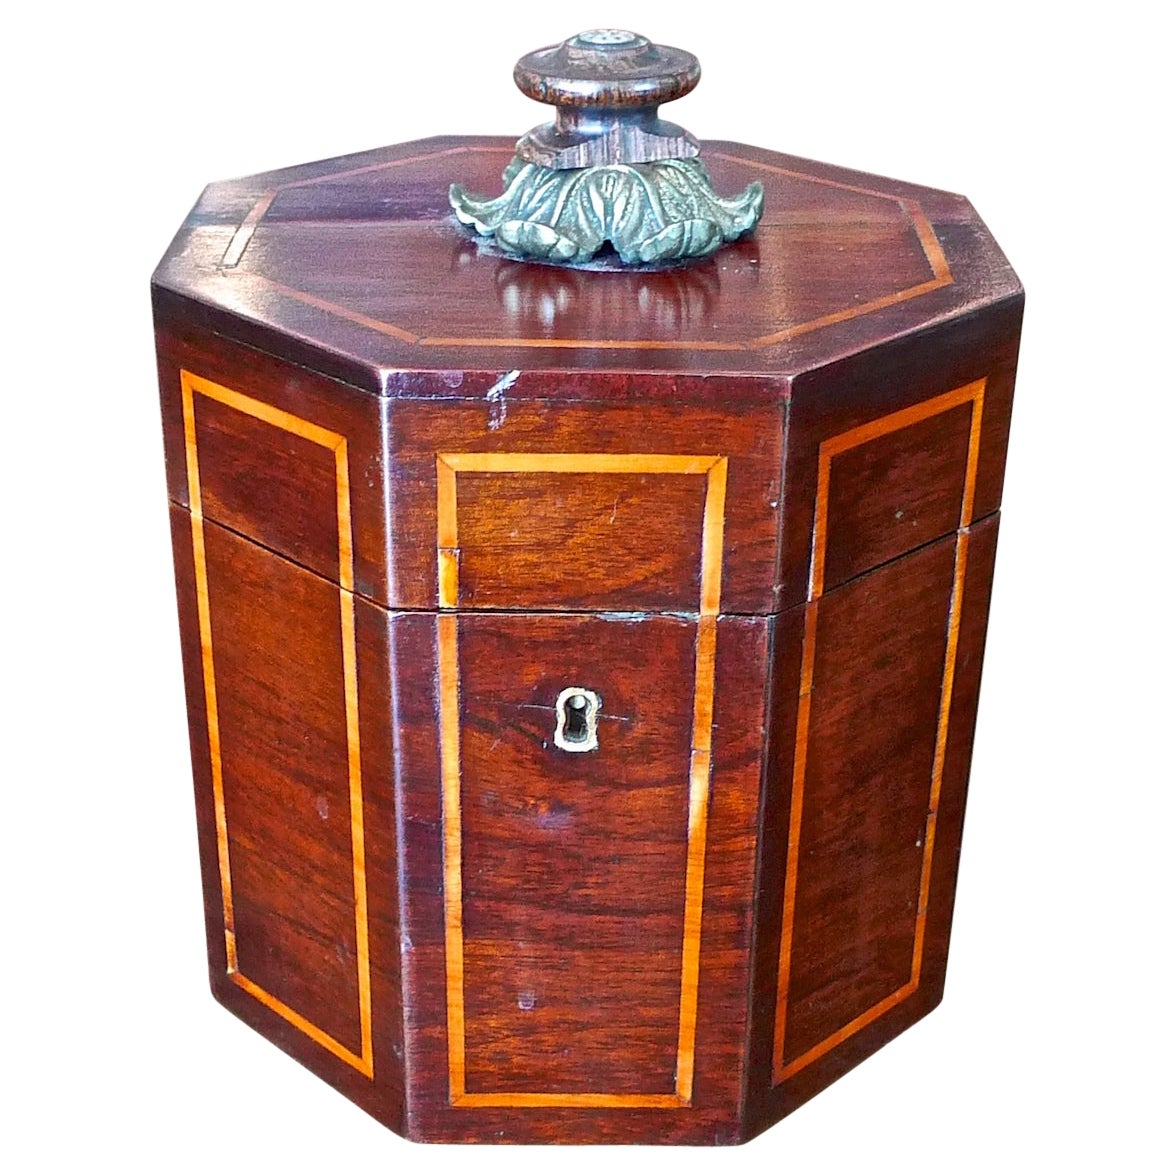 English XVIII Octagonal Mahogany Tea Caddy with Satinwood Inlay and Brass Knob